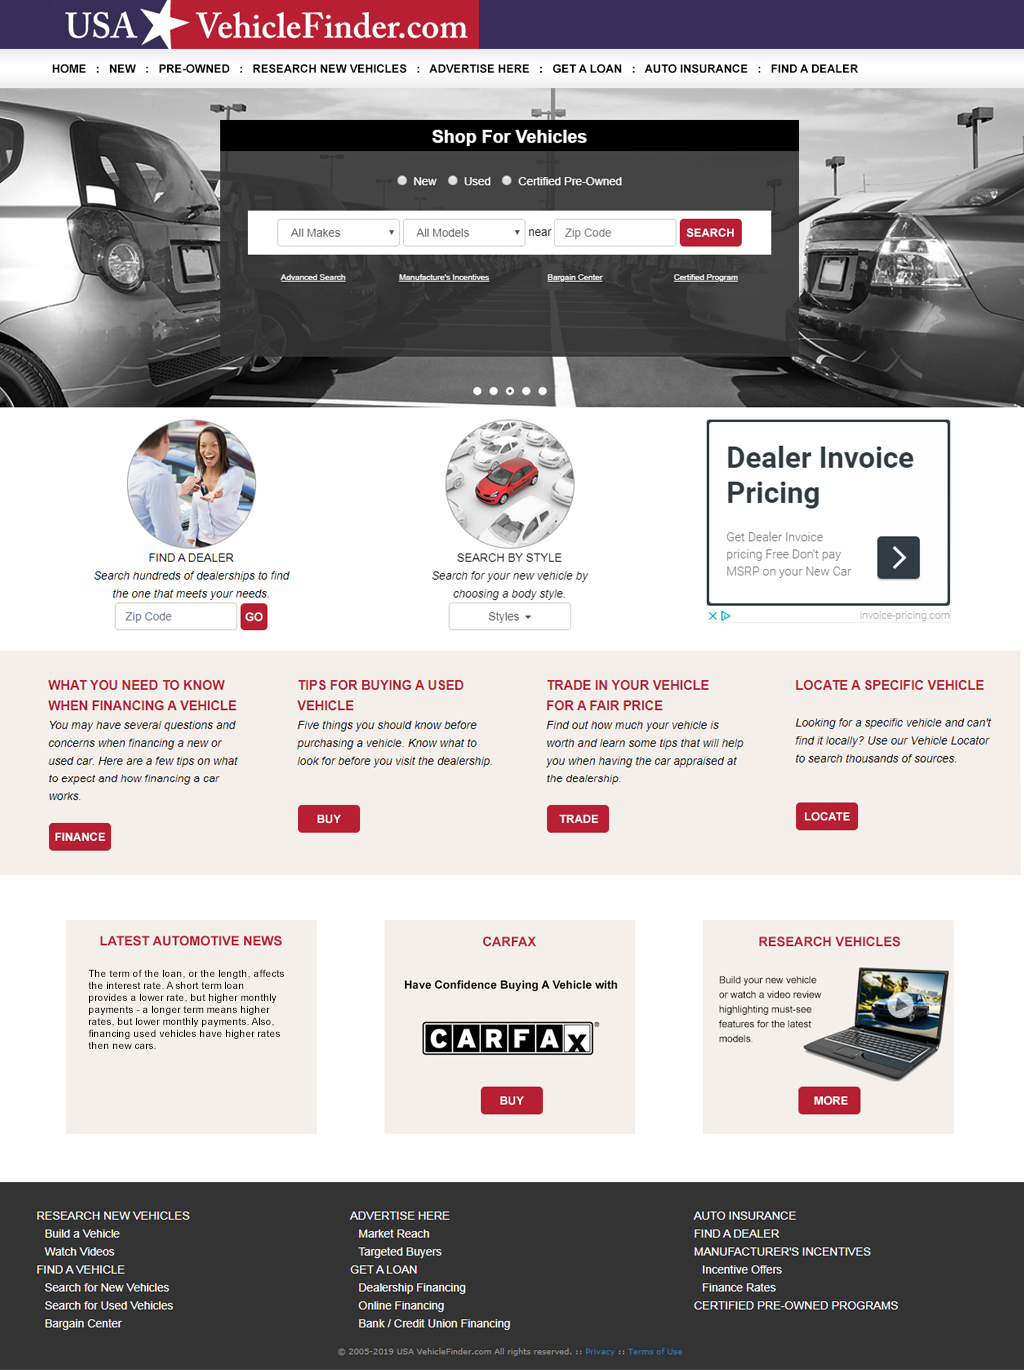 Studio-RM Portfolio - USA VehicleFinder.com Custom Website Design